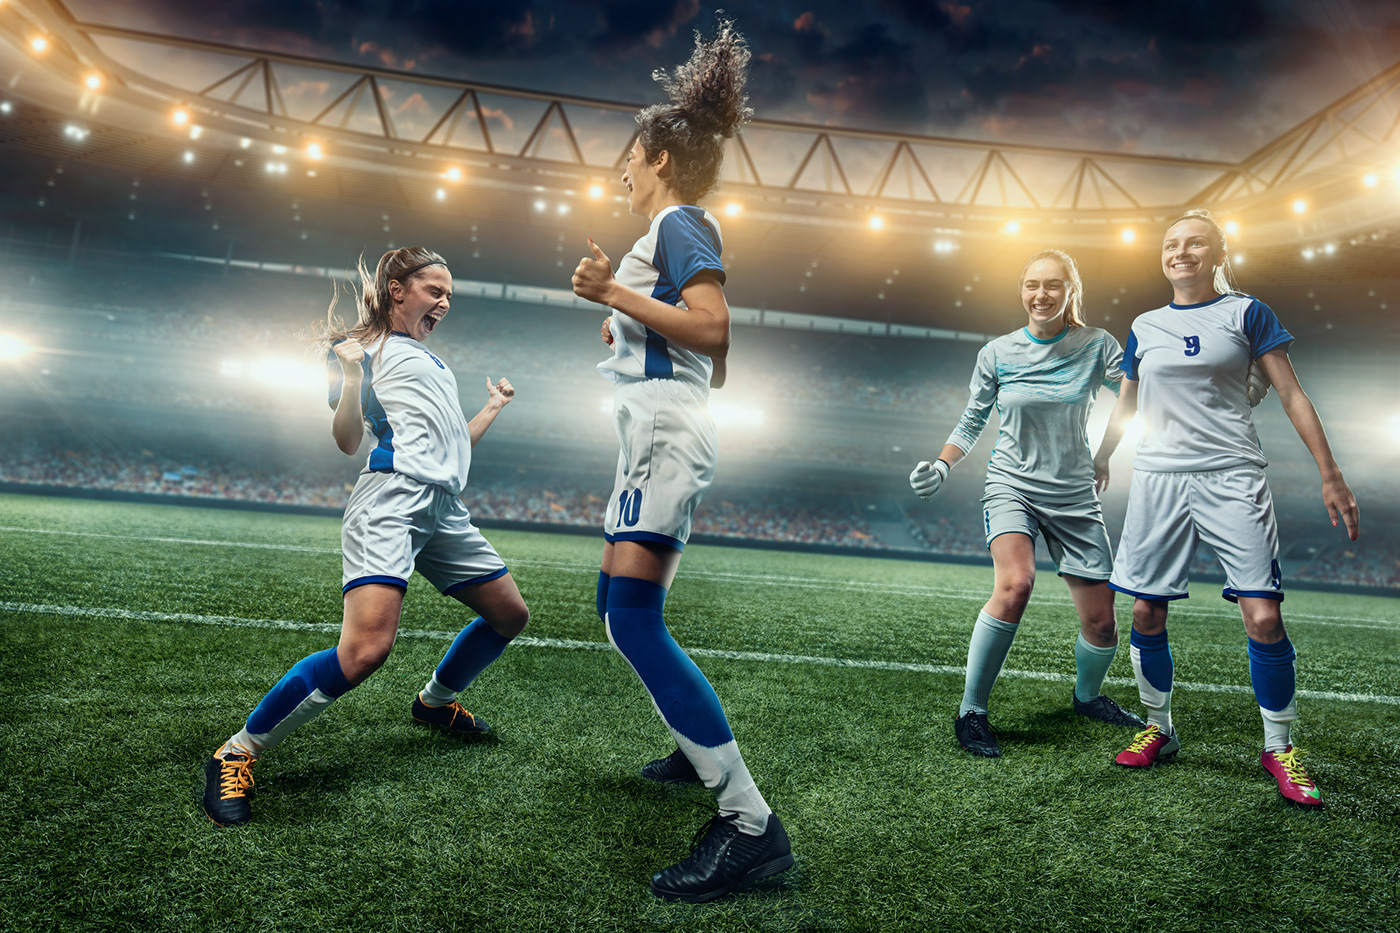 adidas emotion football Nike Play Football Play hard soccer sport sport photo